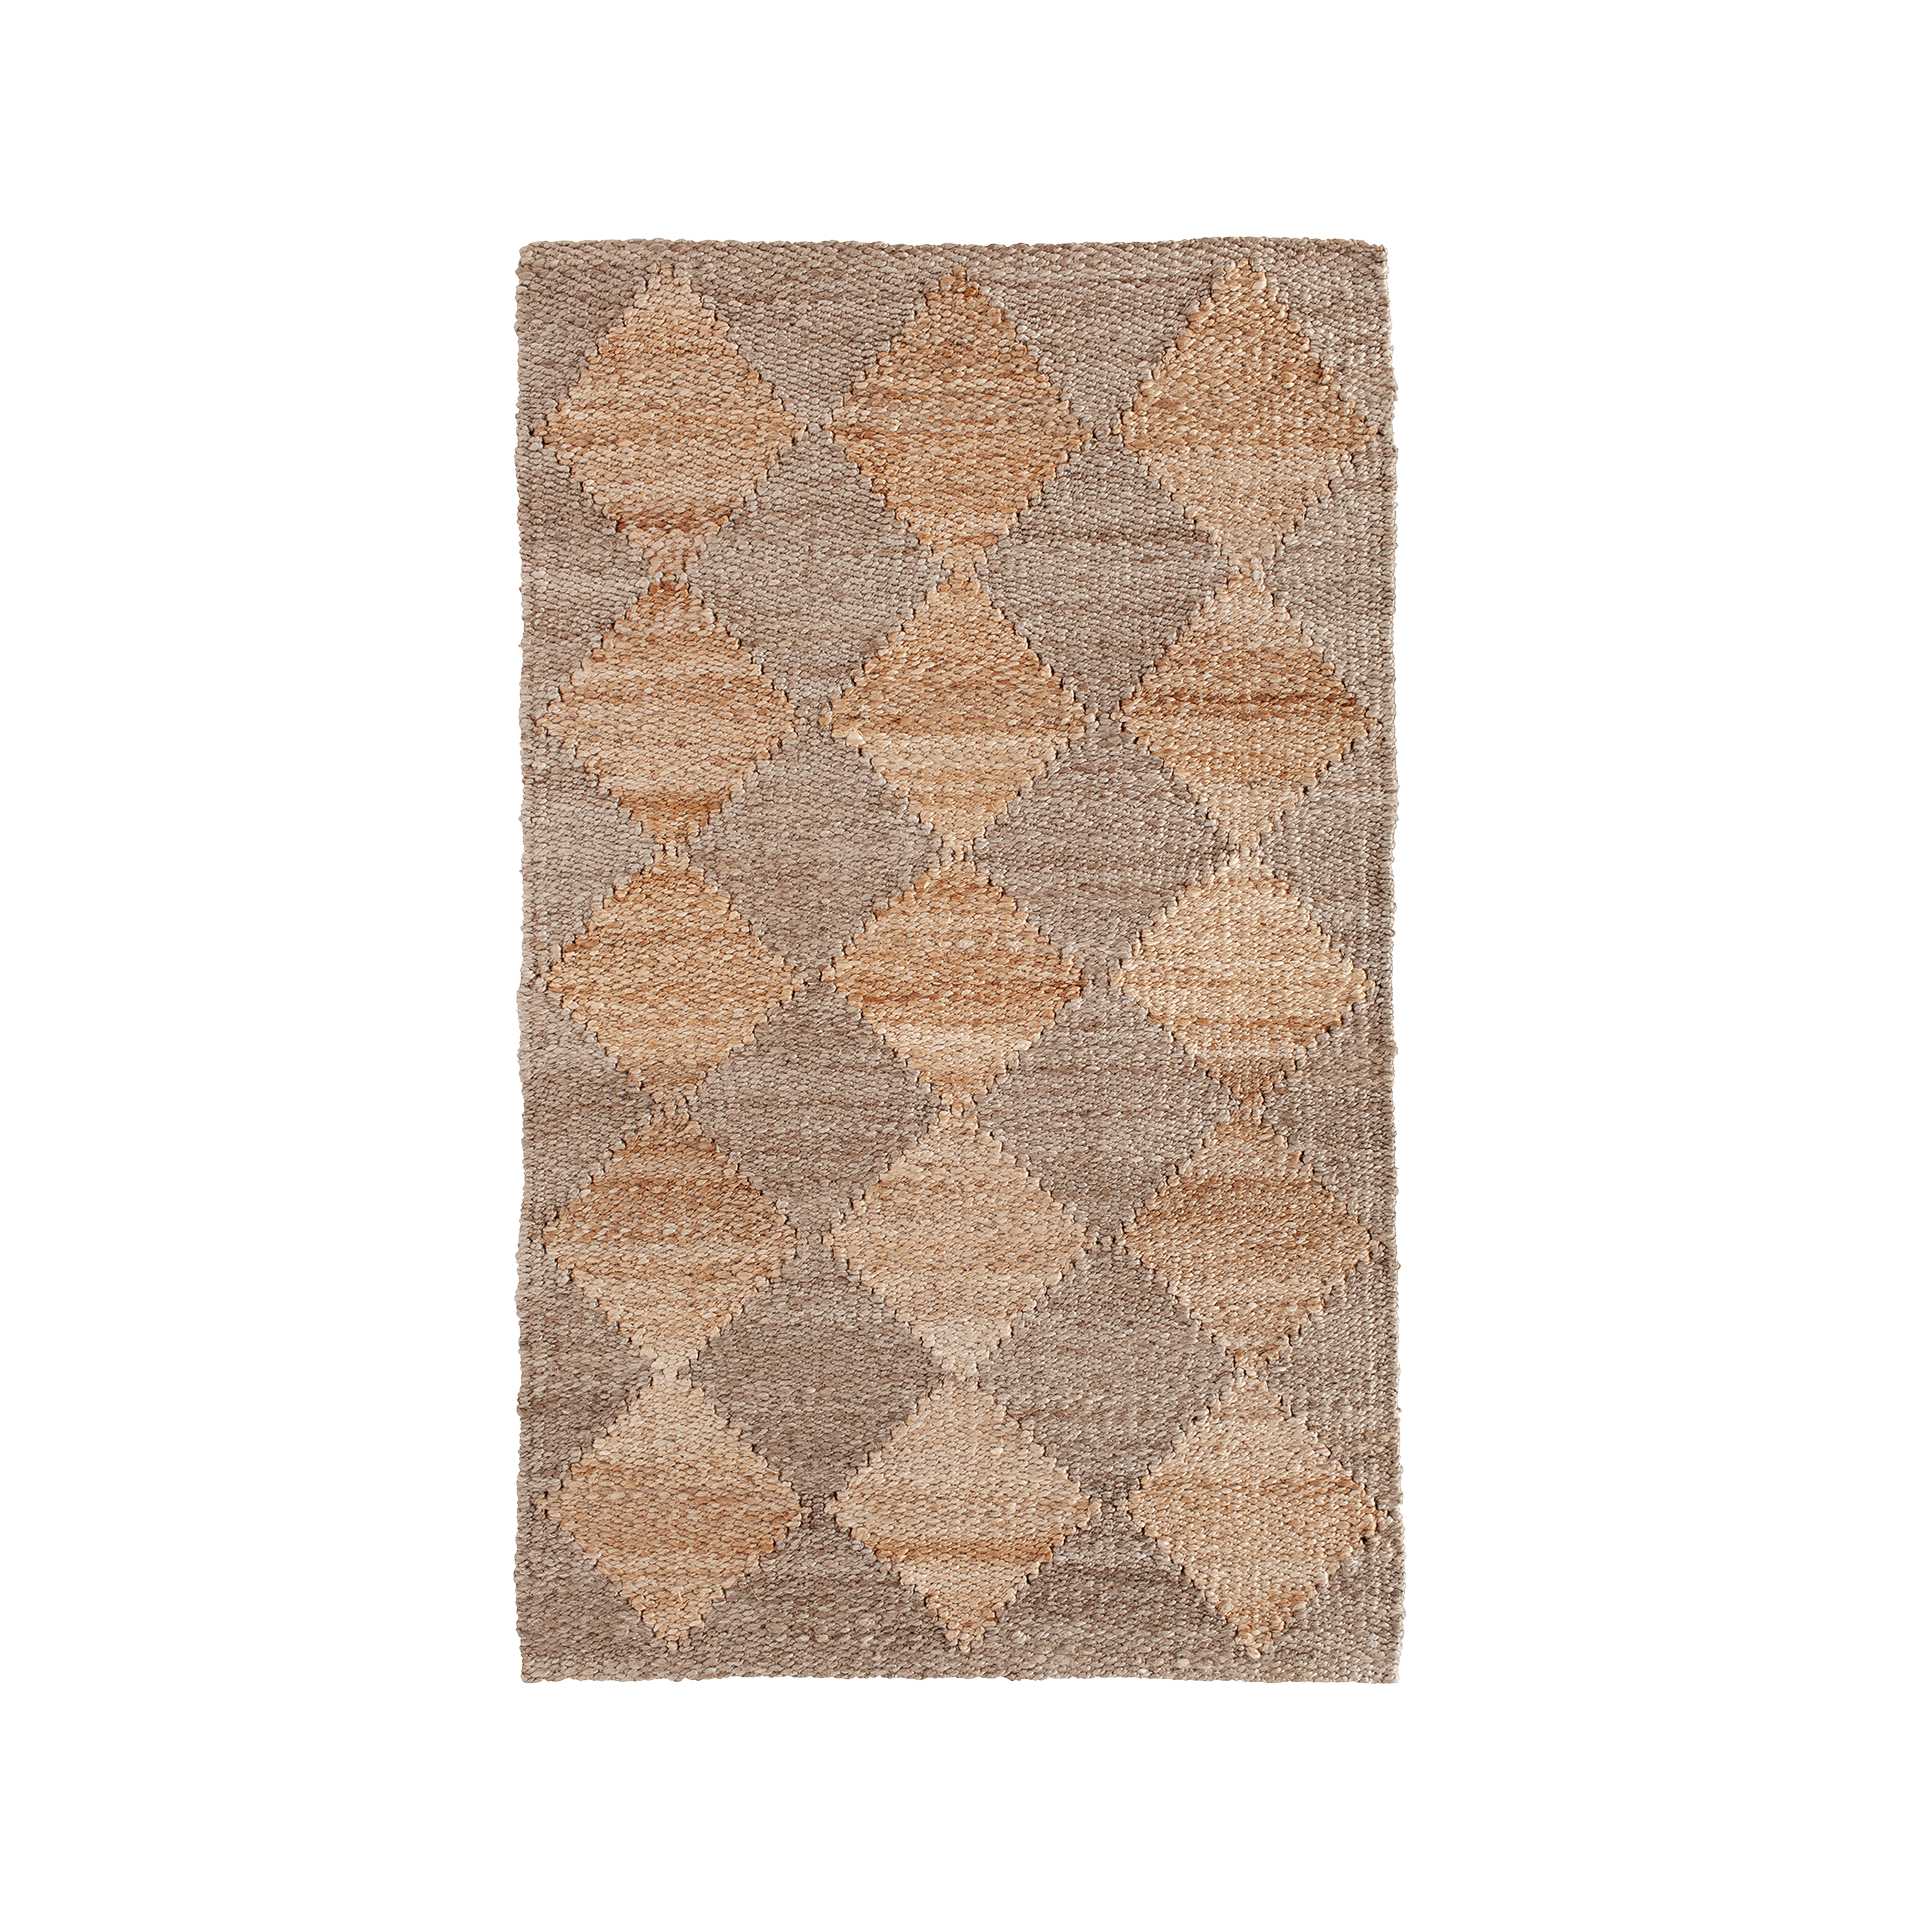 Diamond-patterned Art rug, made of jute